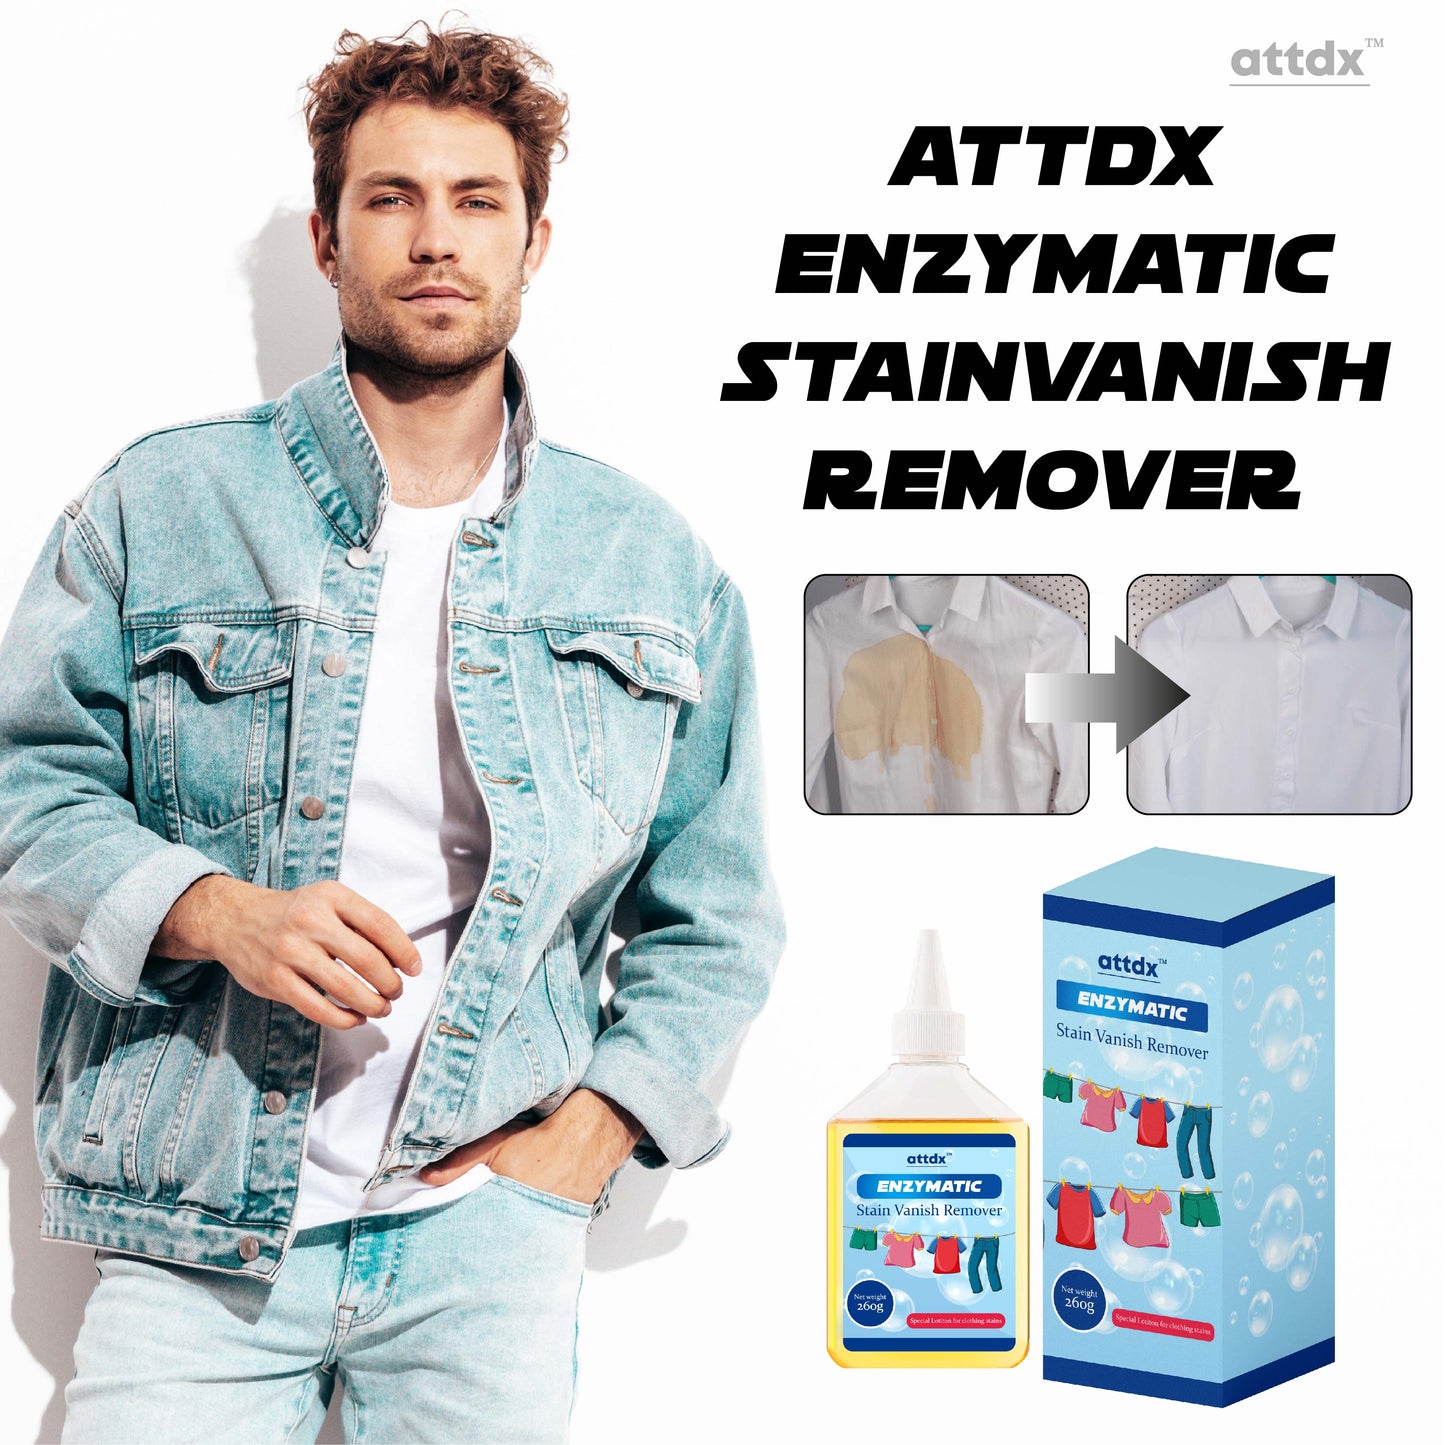 ATTDX Enzymatic StainVanish Remover